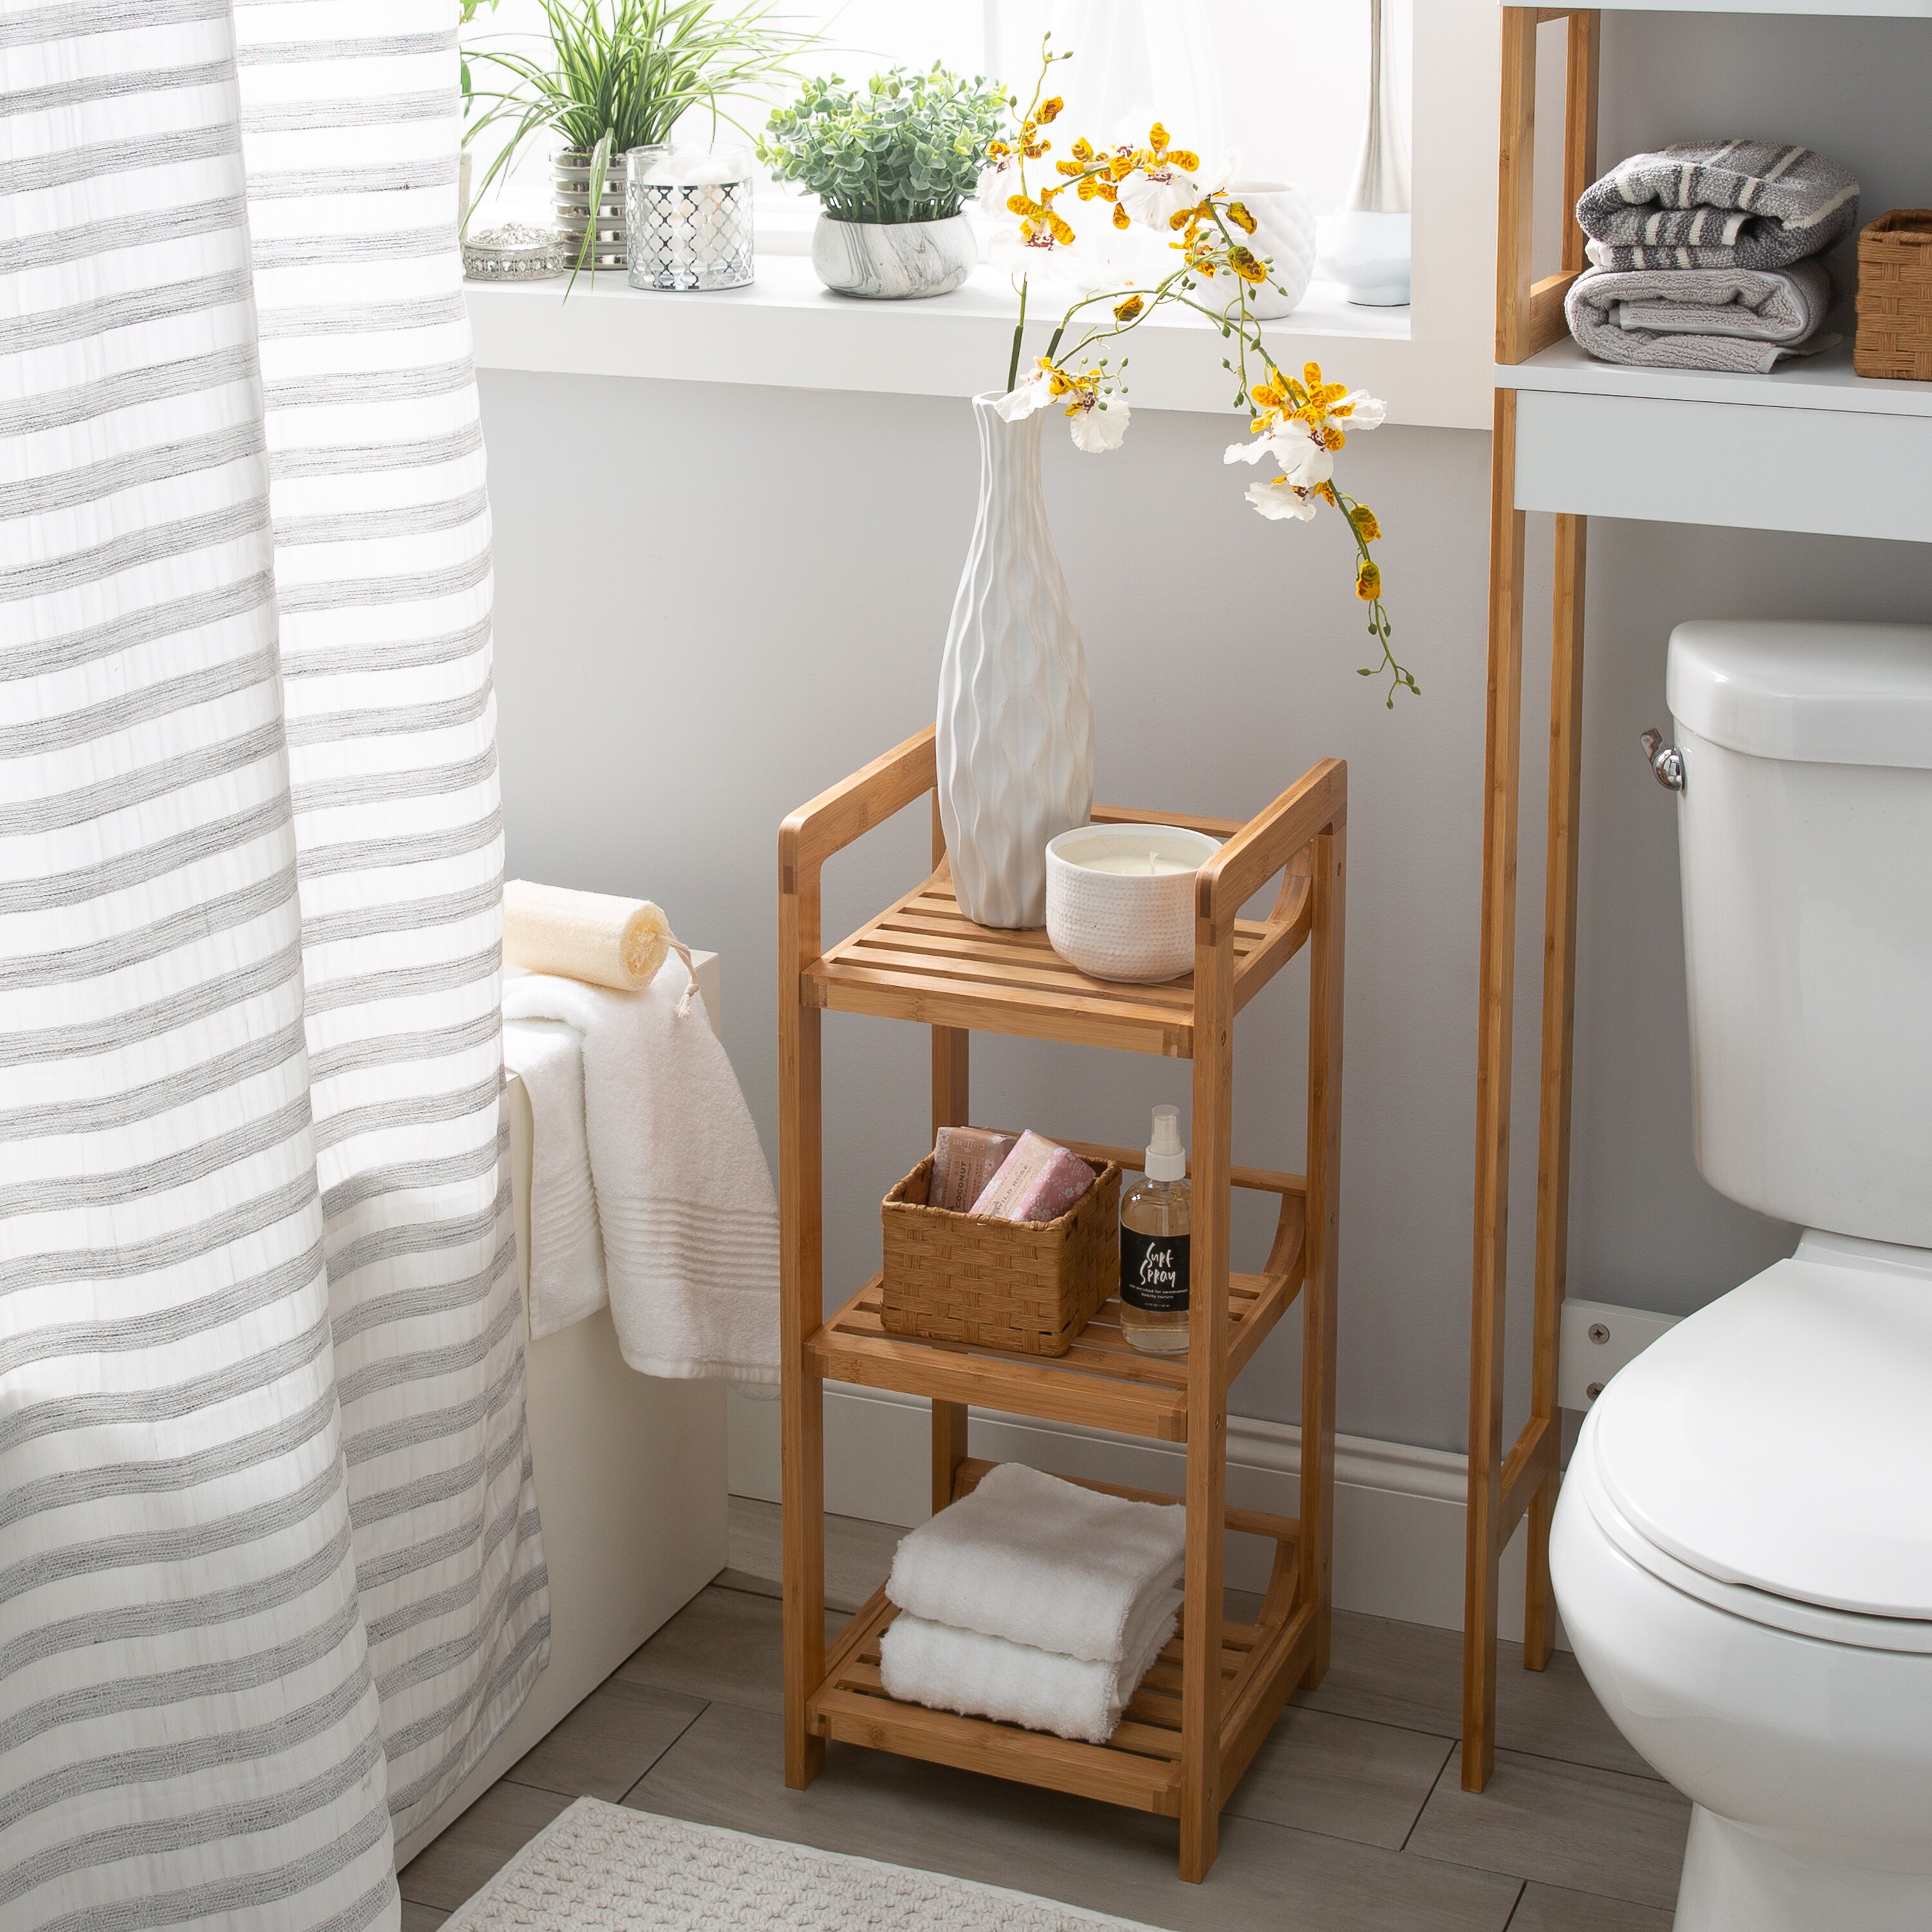 3 Tier Corner Storage Caddy Chrome  For Home Bathroom Accessories New 